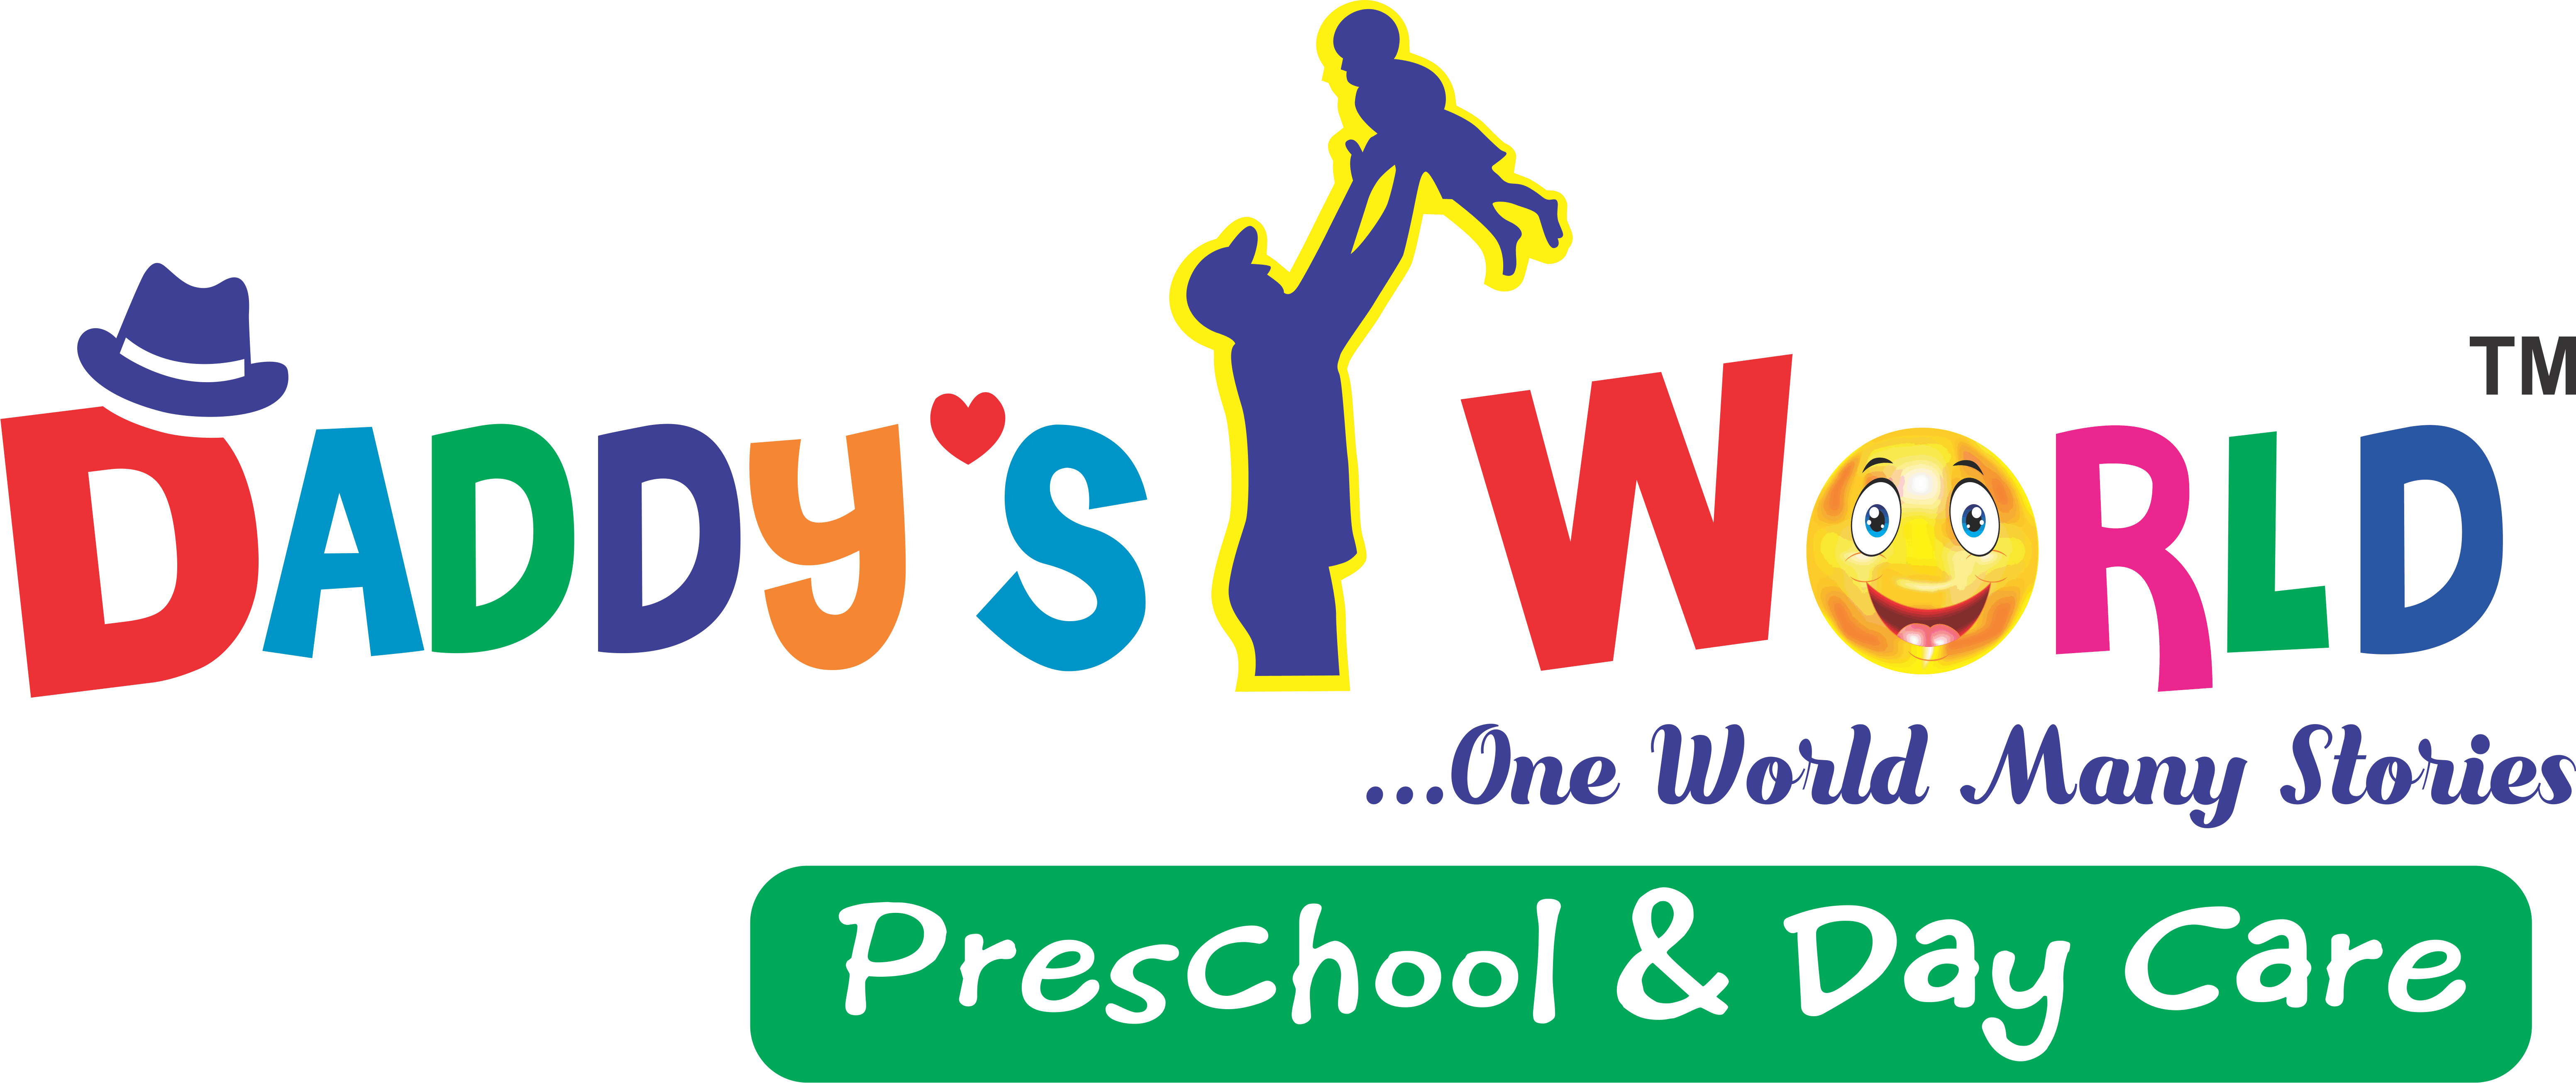 Daddy's World Preschool Daycare